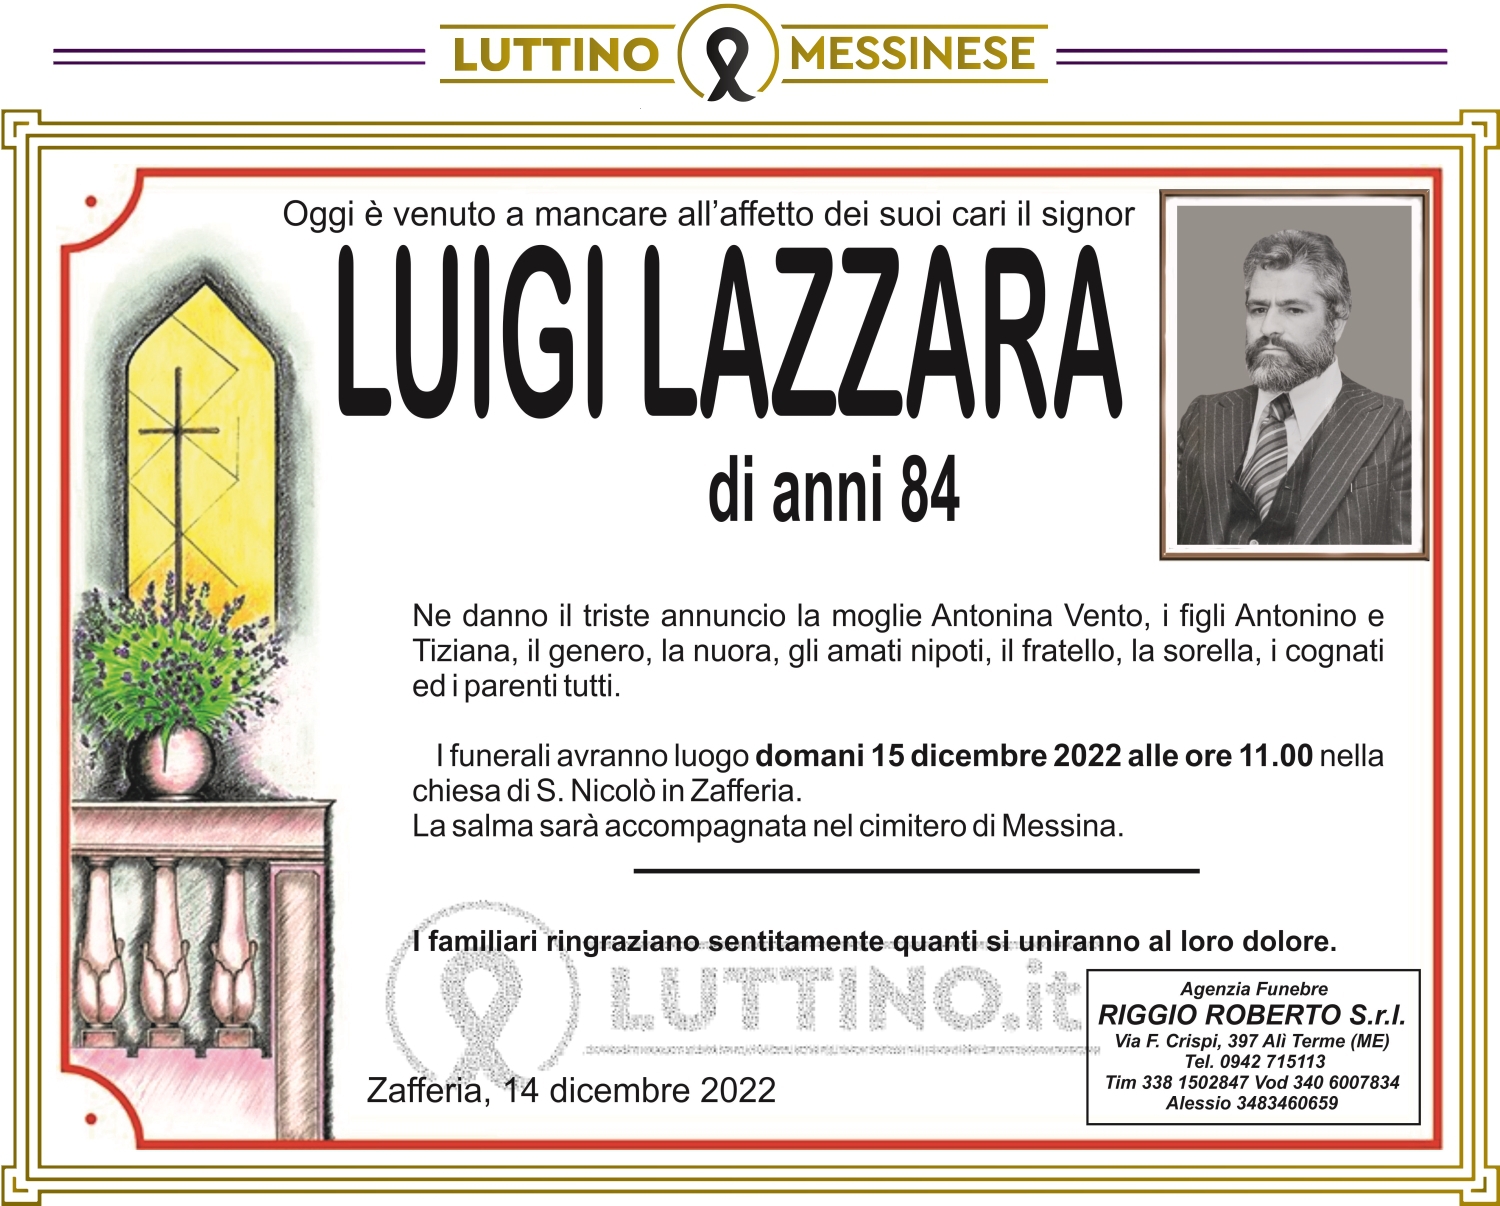 Luigi Lazzara